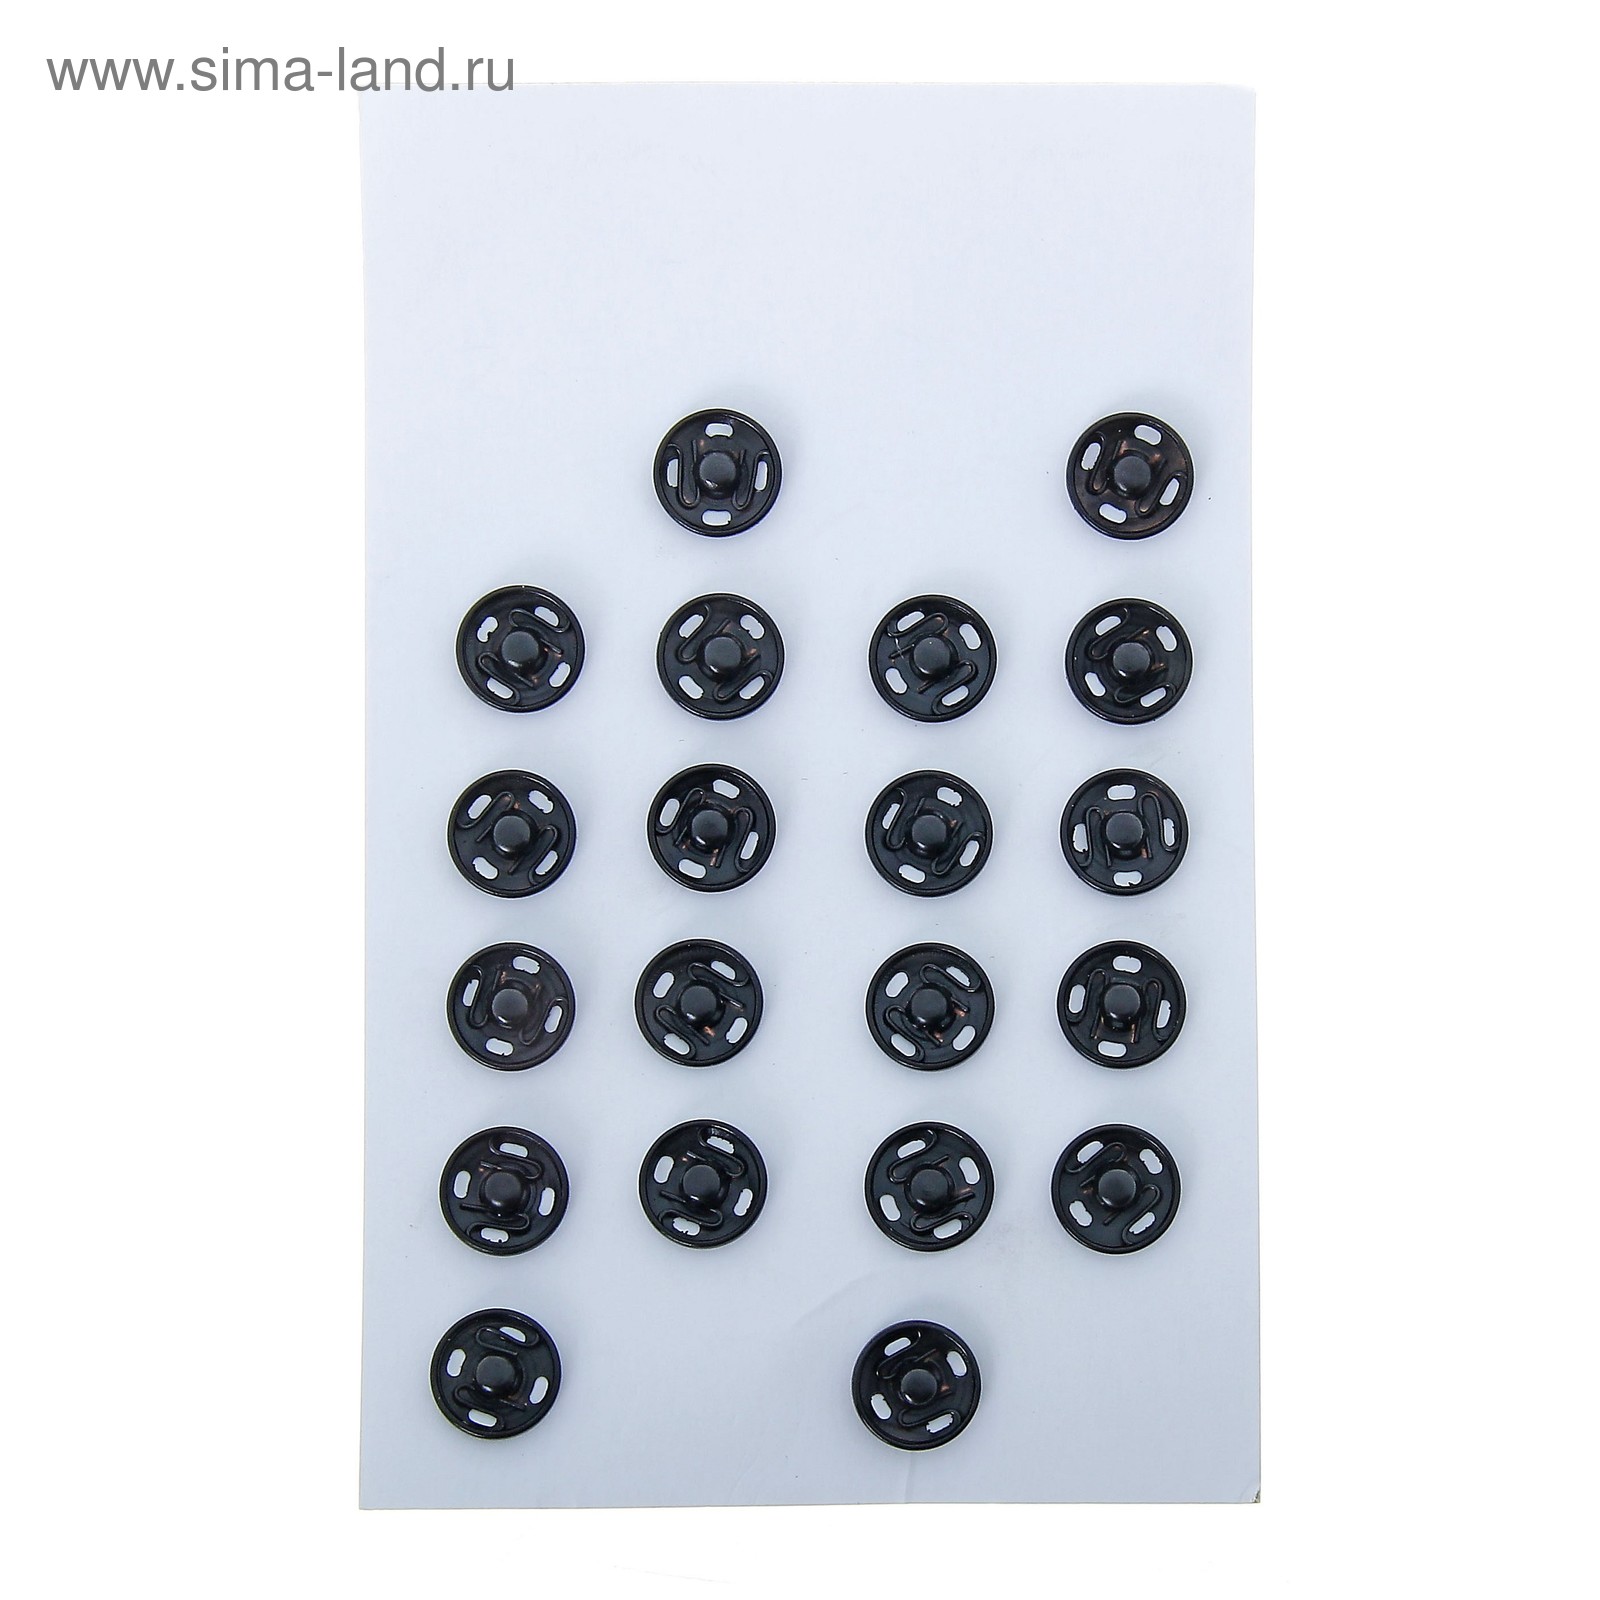 Кнопки для одежды (1000 шт) 17 мм антик